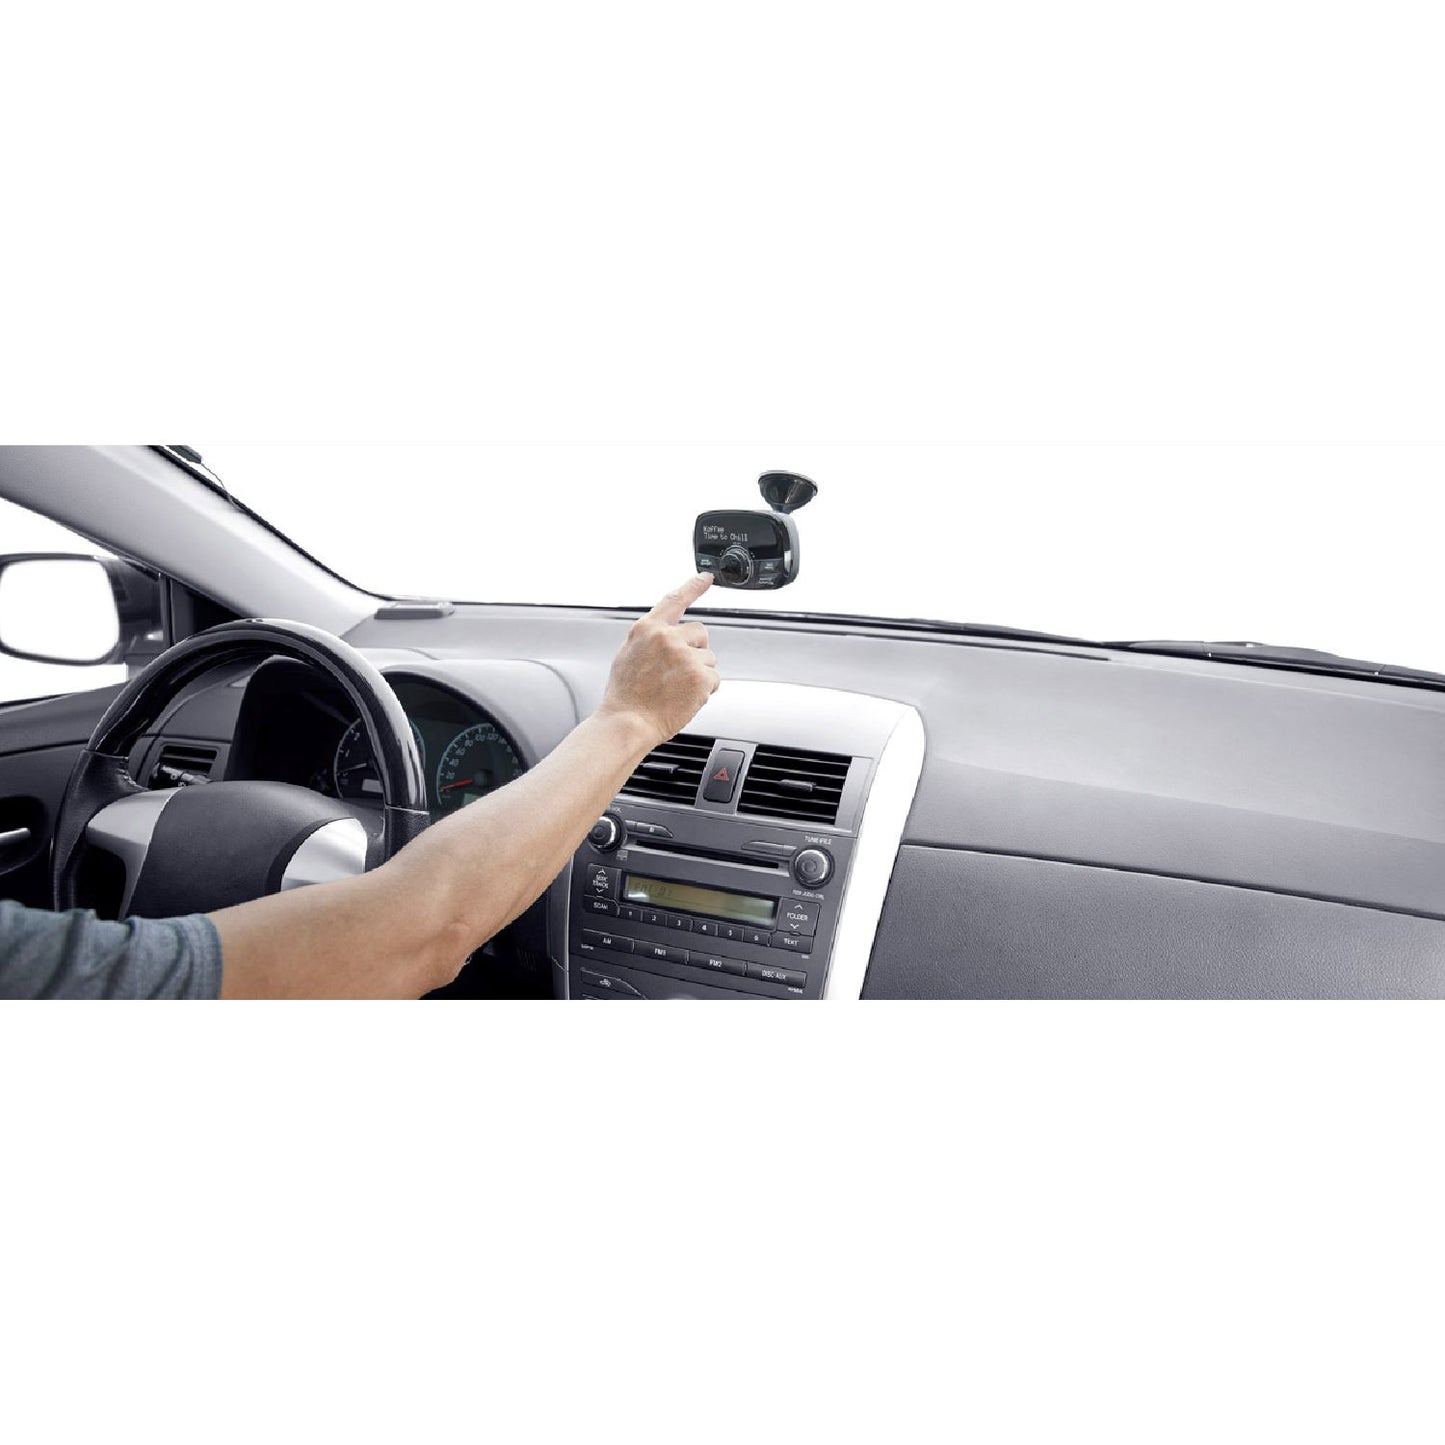 Adaptateur radio Sangean GOTUNE 200 DAB+ via FM avec Bluetooth et support voiture